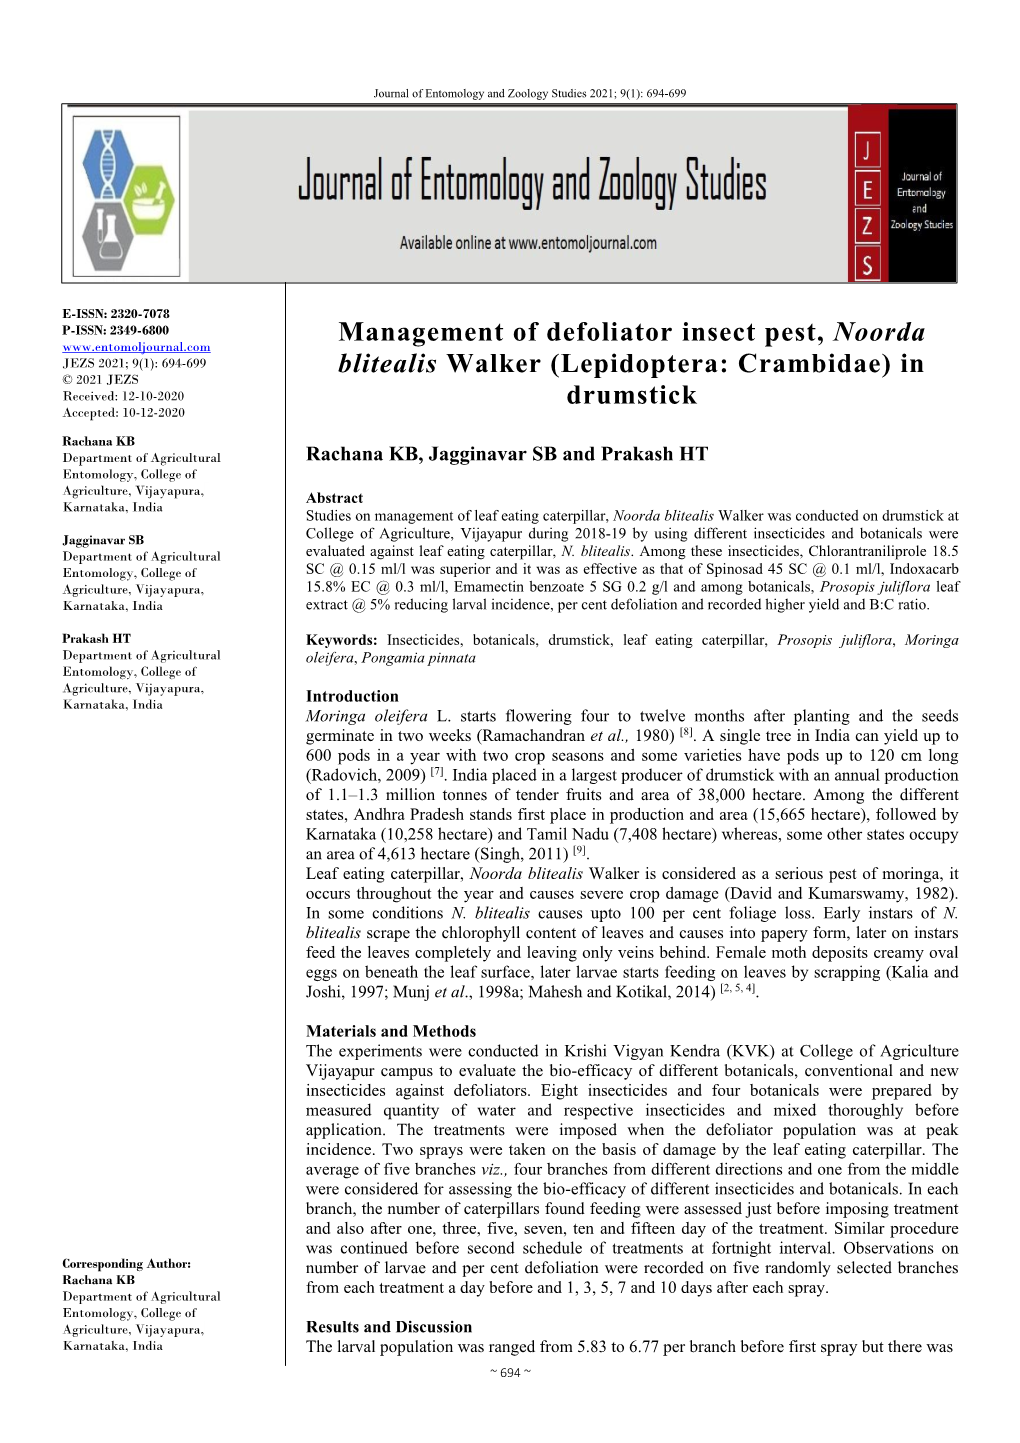 Management of Defoliator Insect Pest, Noorda Blitealis Walker